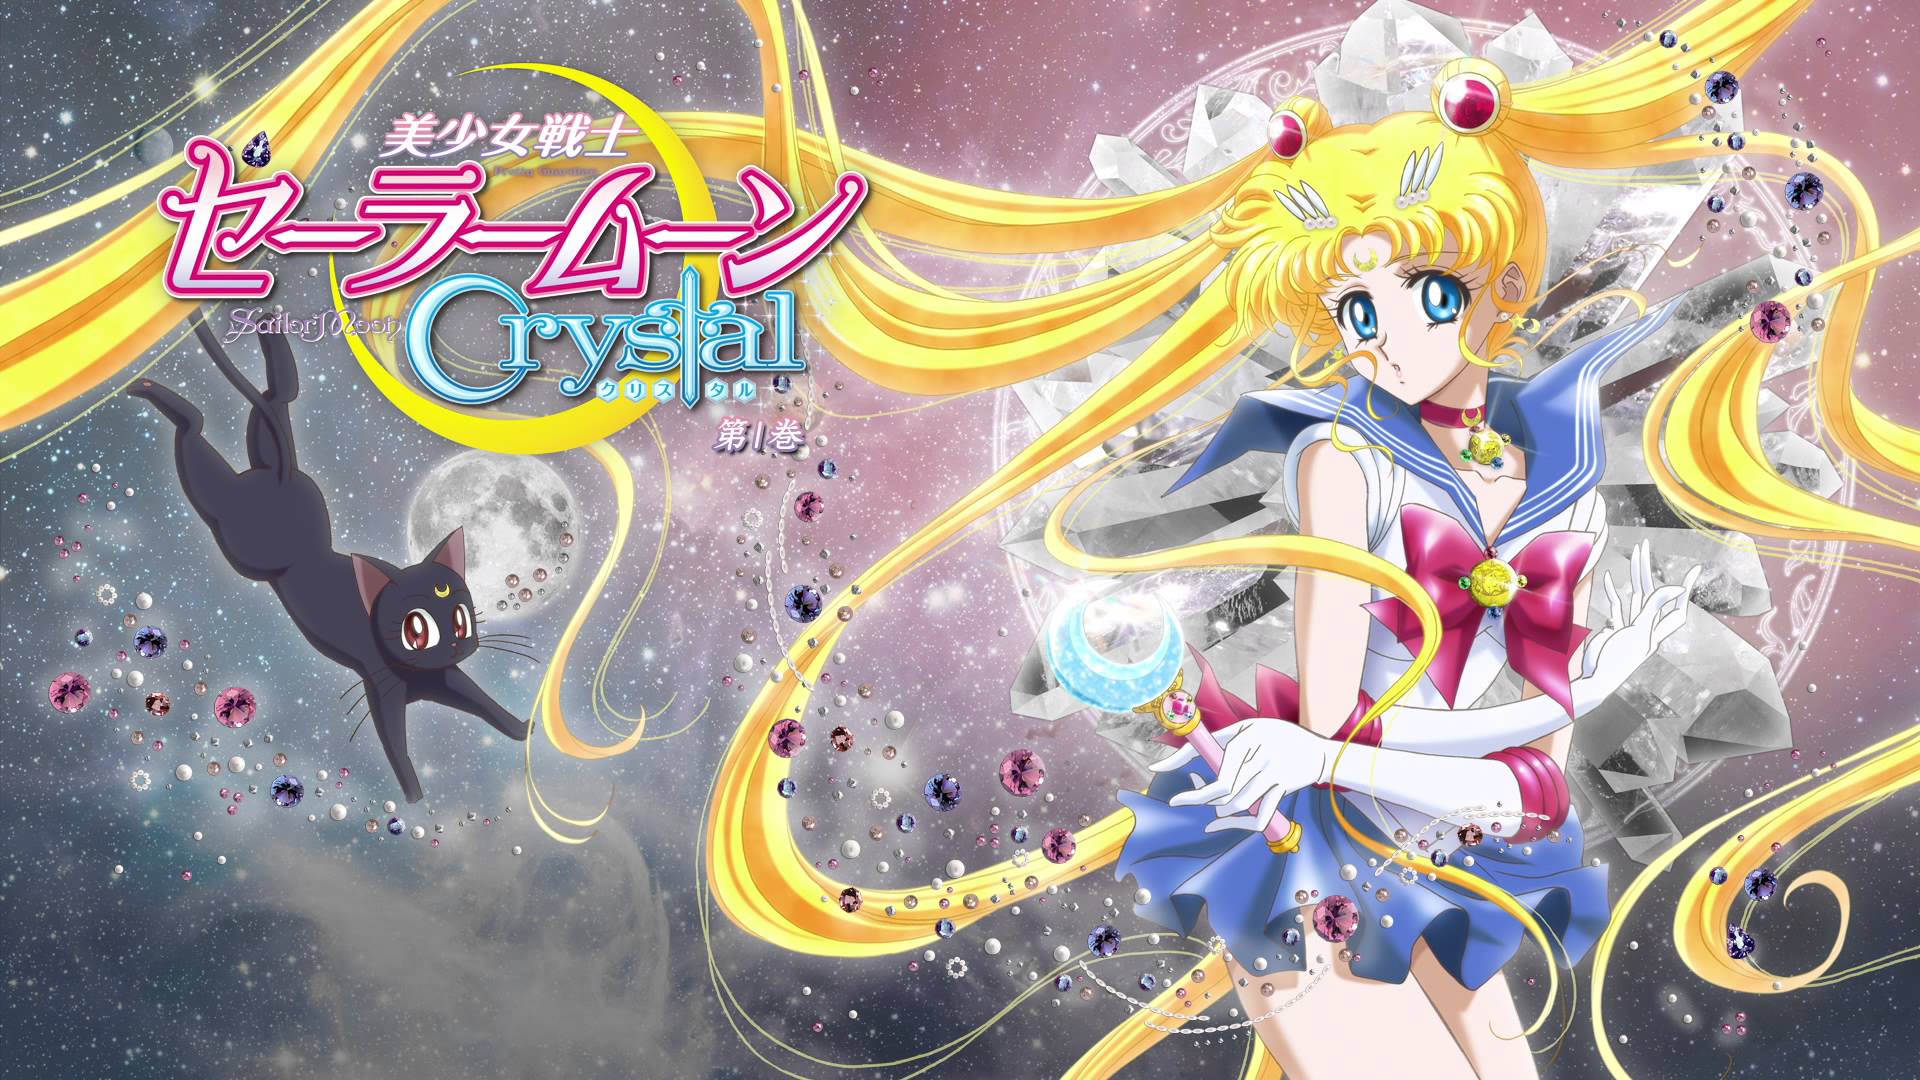 Sailor Moon Crystal – The Latest Anime Adaptation Hits Blu-ray Disc!